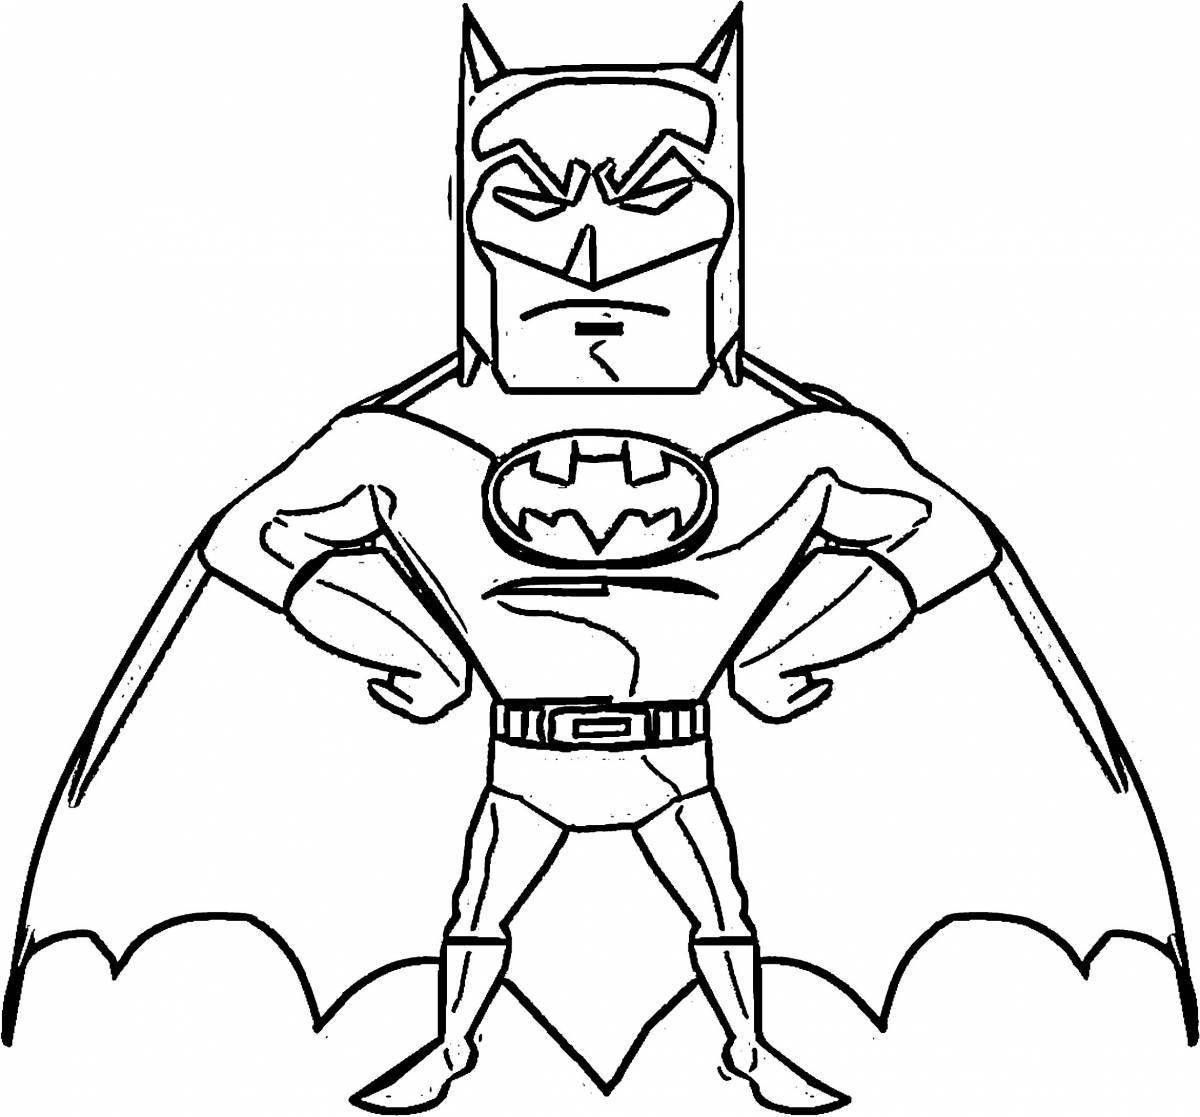 Креативная раскраска бэтмена для детей 3-4 лет